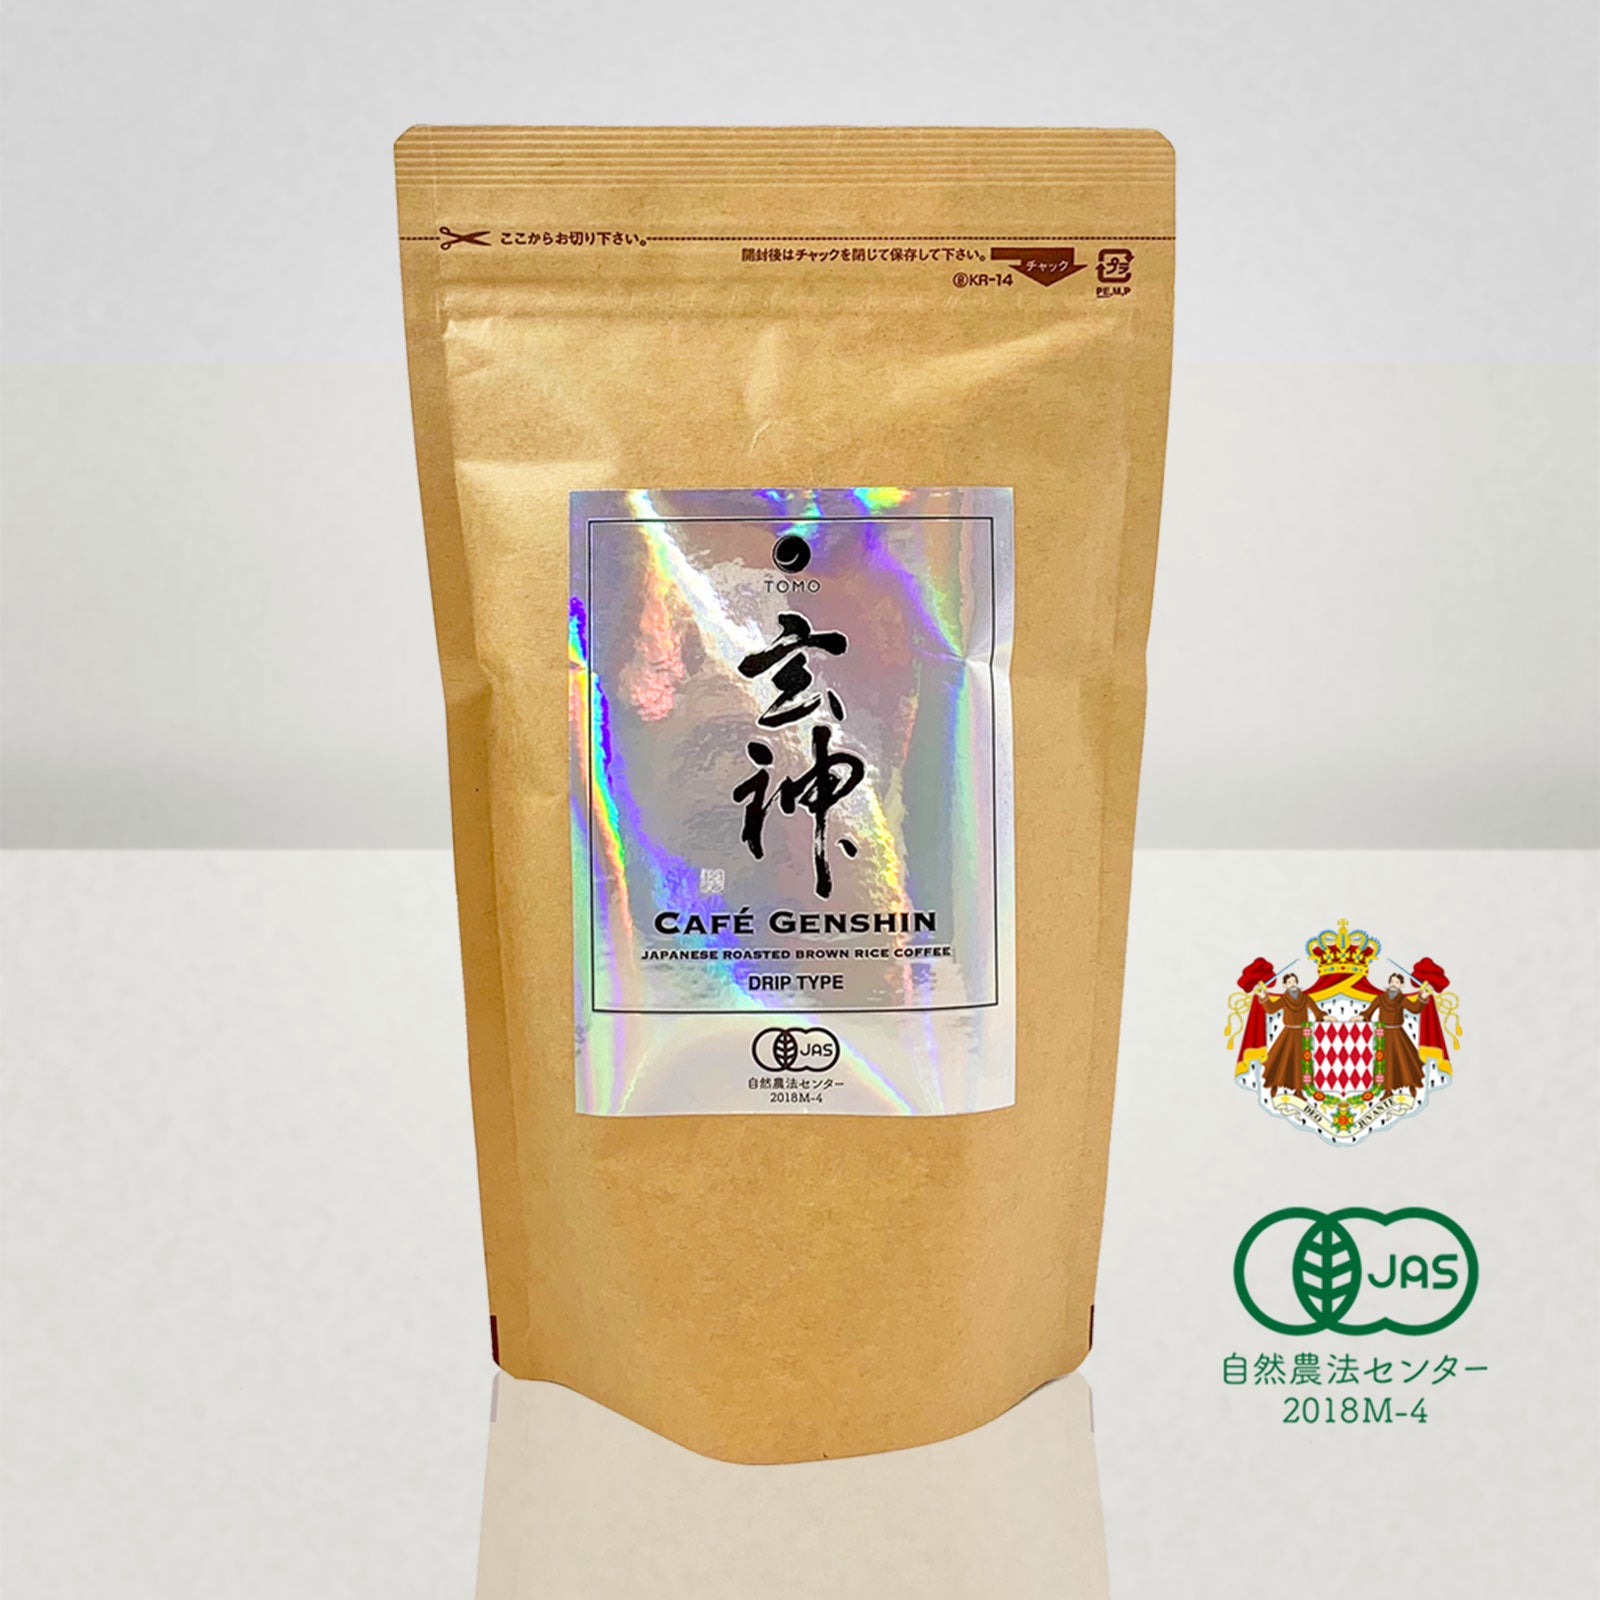 Café Genshin Organic Premium Roasted Brown Rice Coffee (Drip Type 300g)